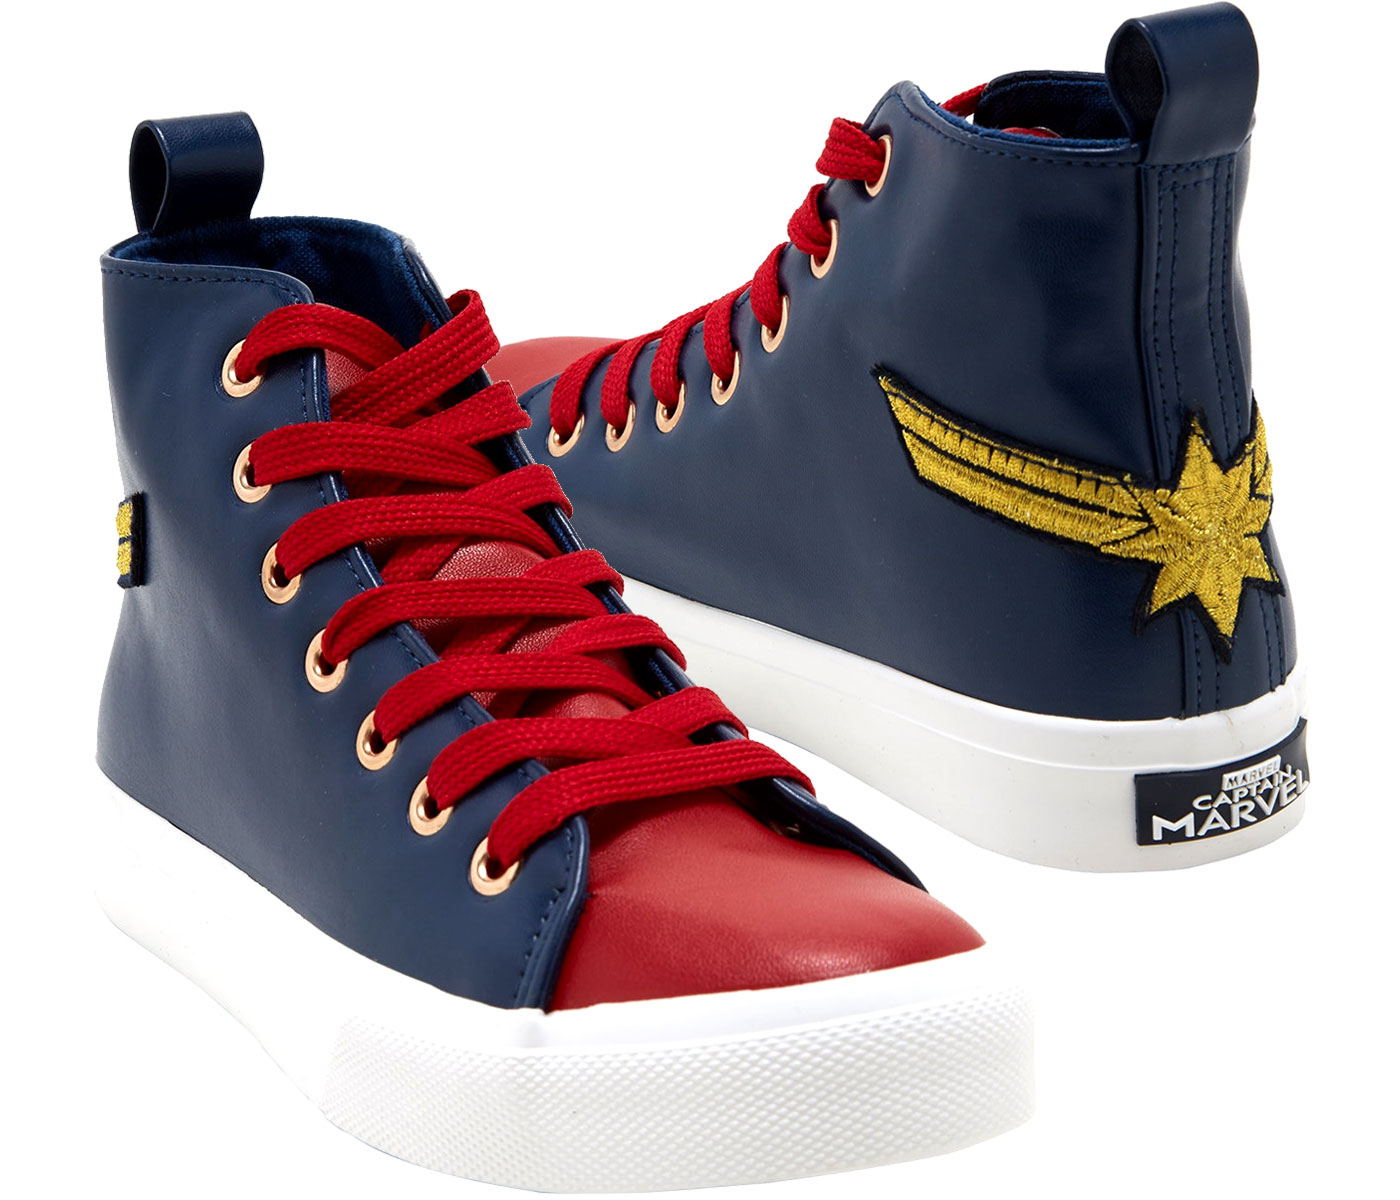 Marvel Captain Marvel HiTop Sneakers